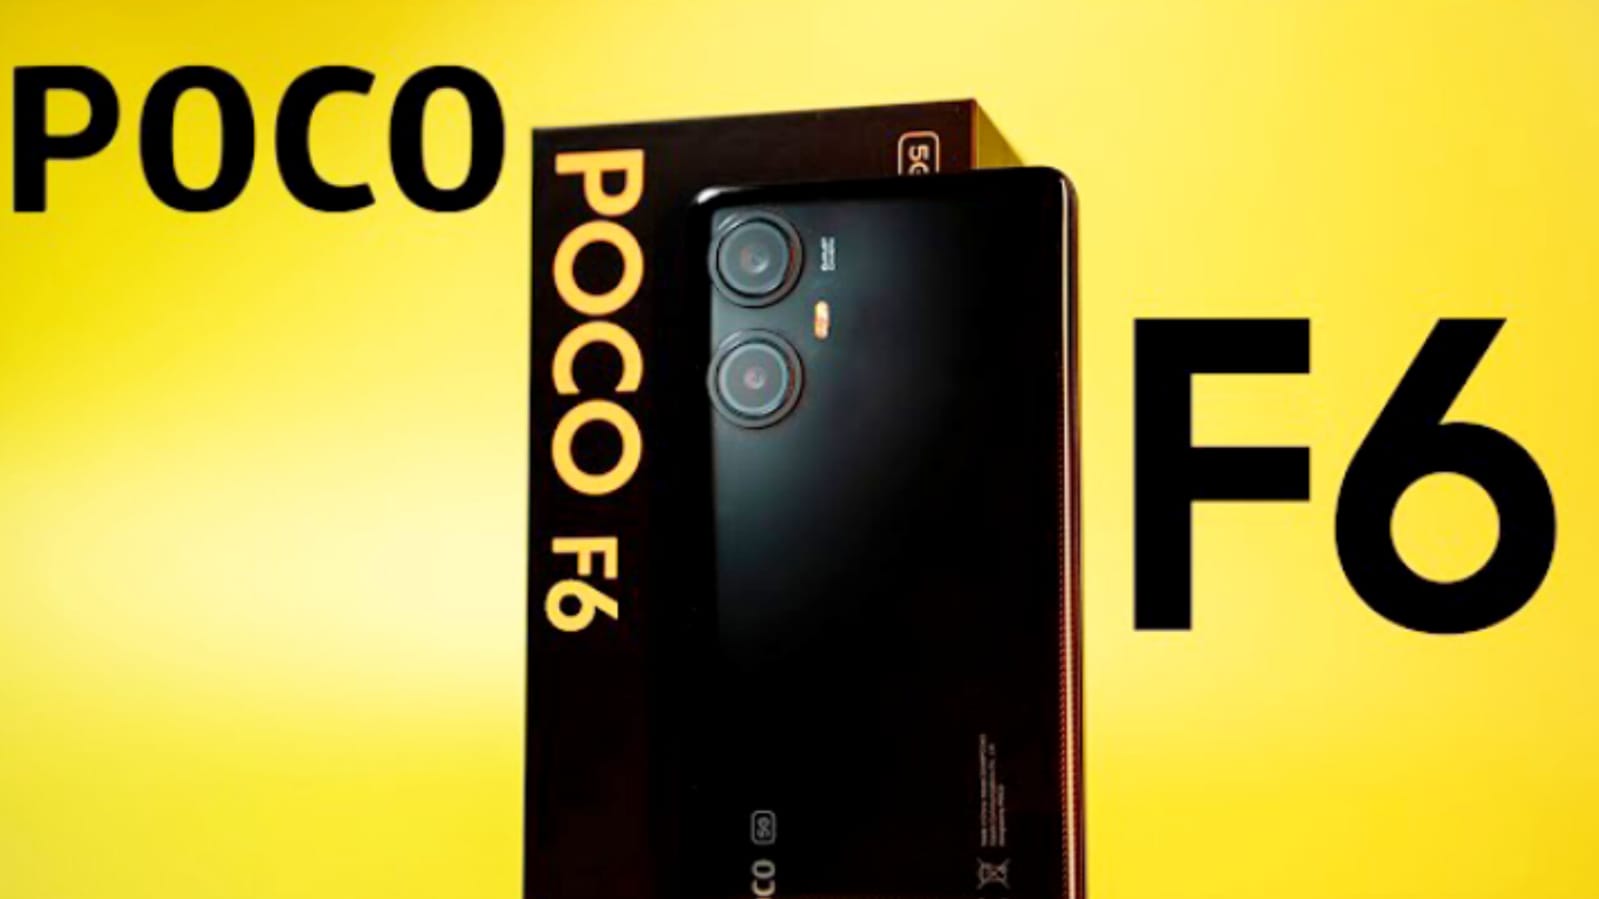 Poco F6 smartphone with sleek design and AMOLED display.